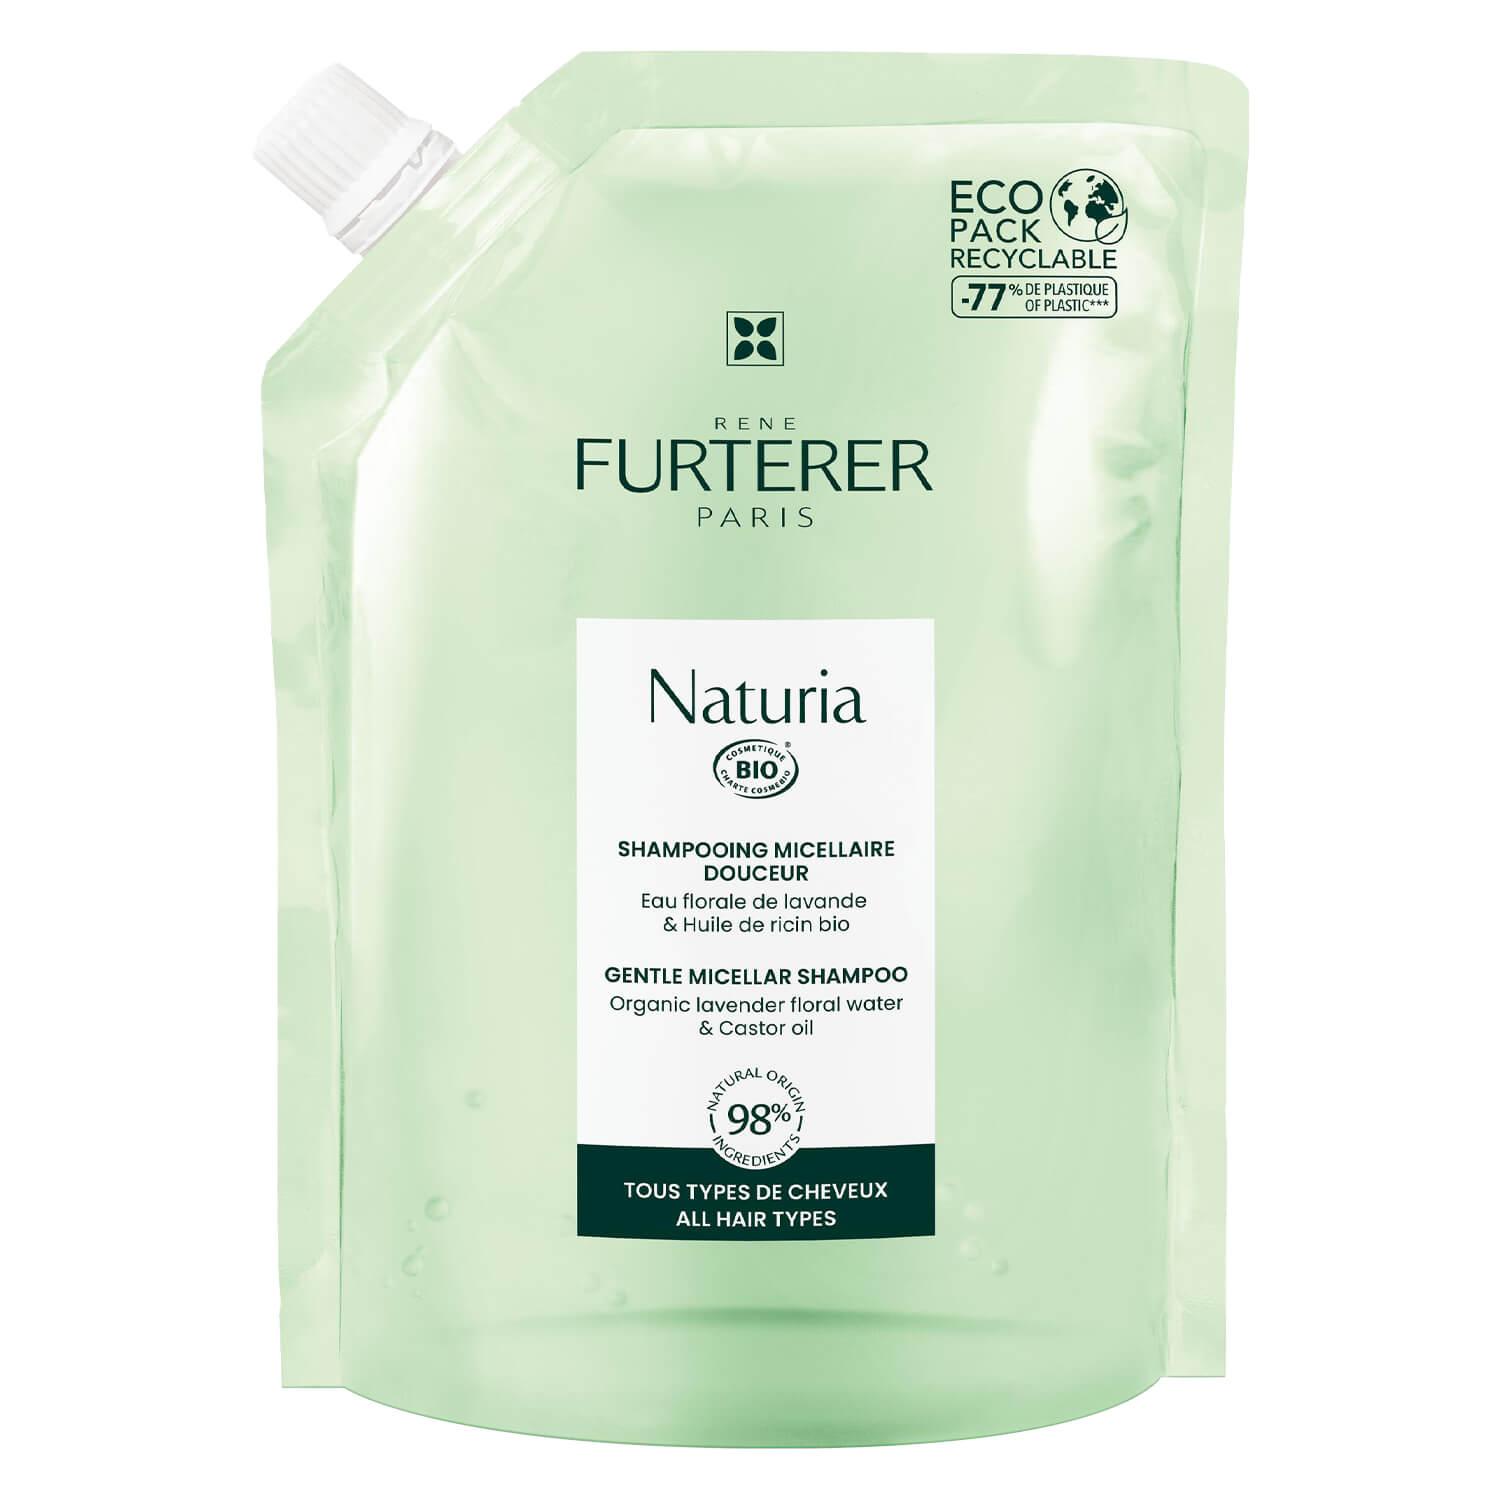 Naturia - Gentle Micellar Shampoo Refill